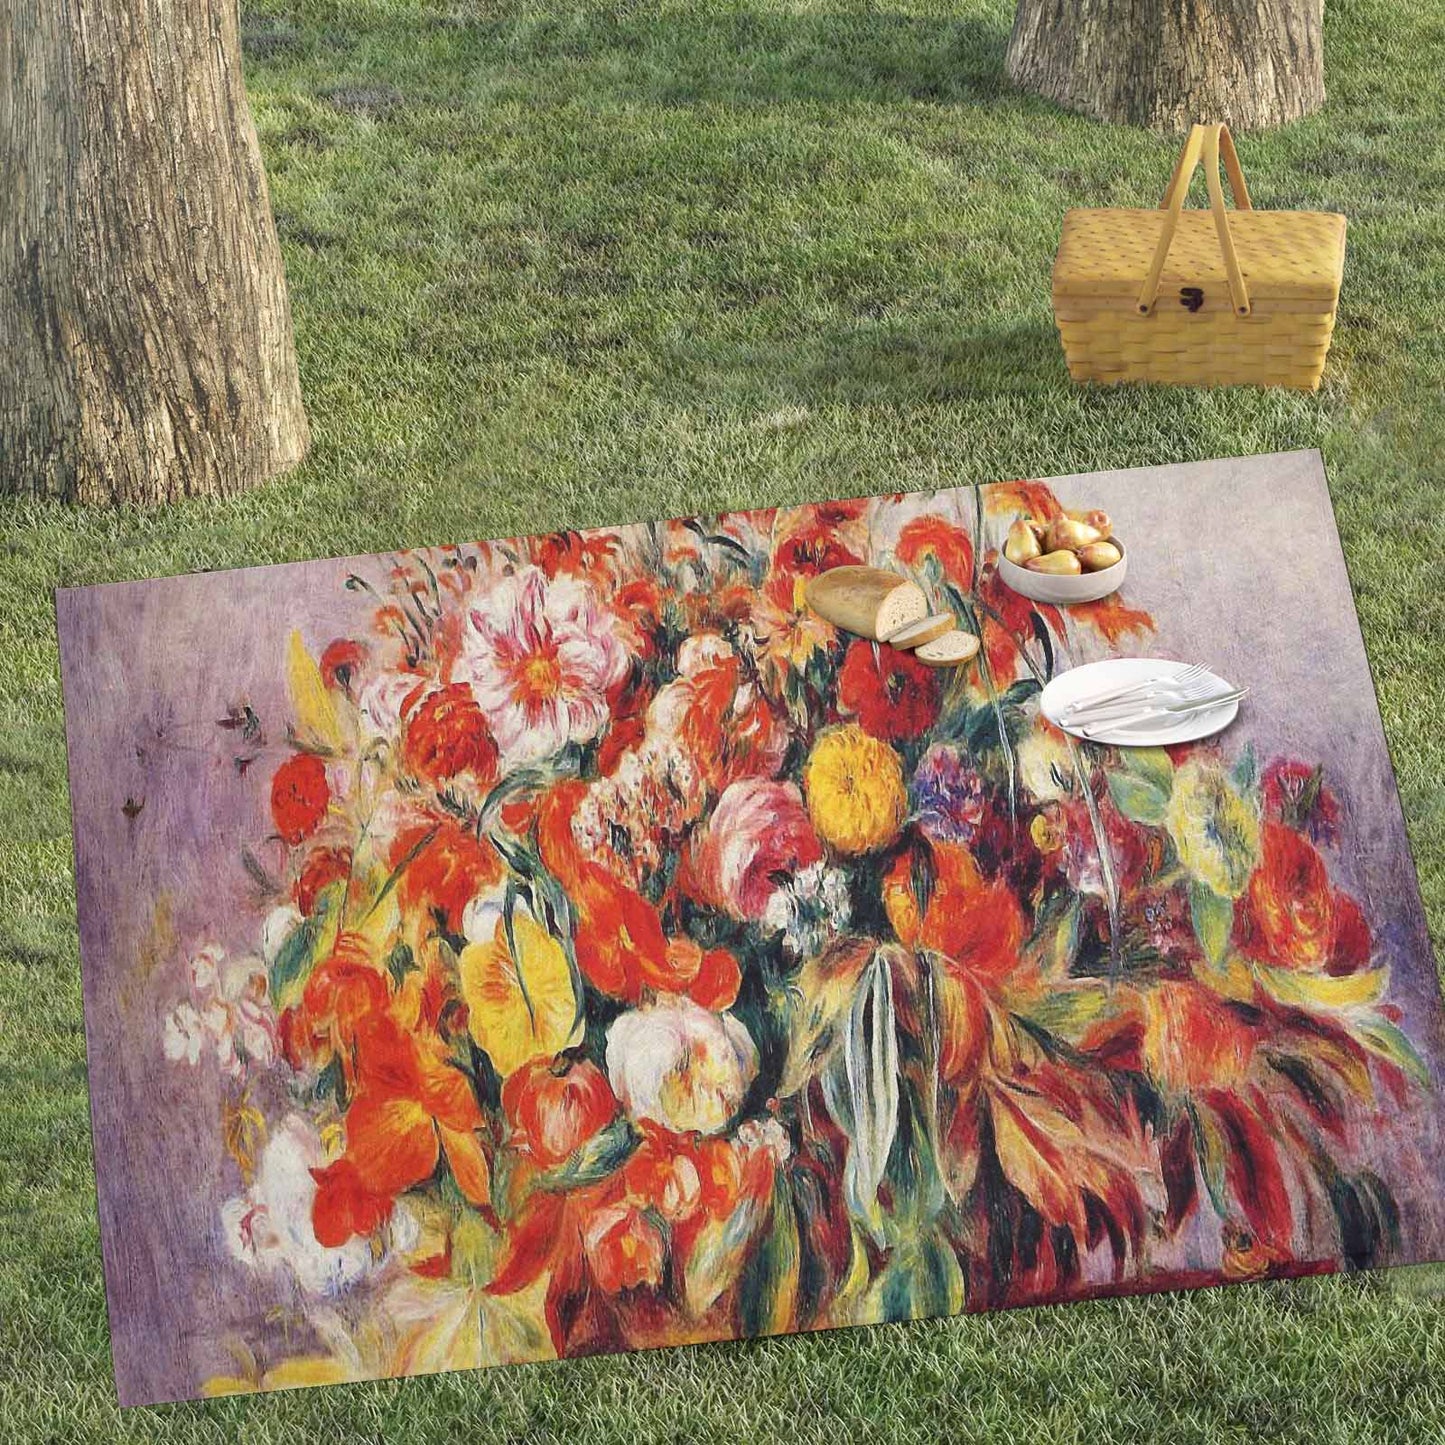 Vintage Floral waterproof picnic mat, 81 x 55in, Design 19